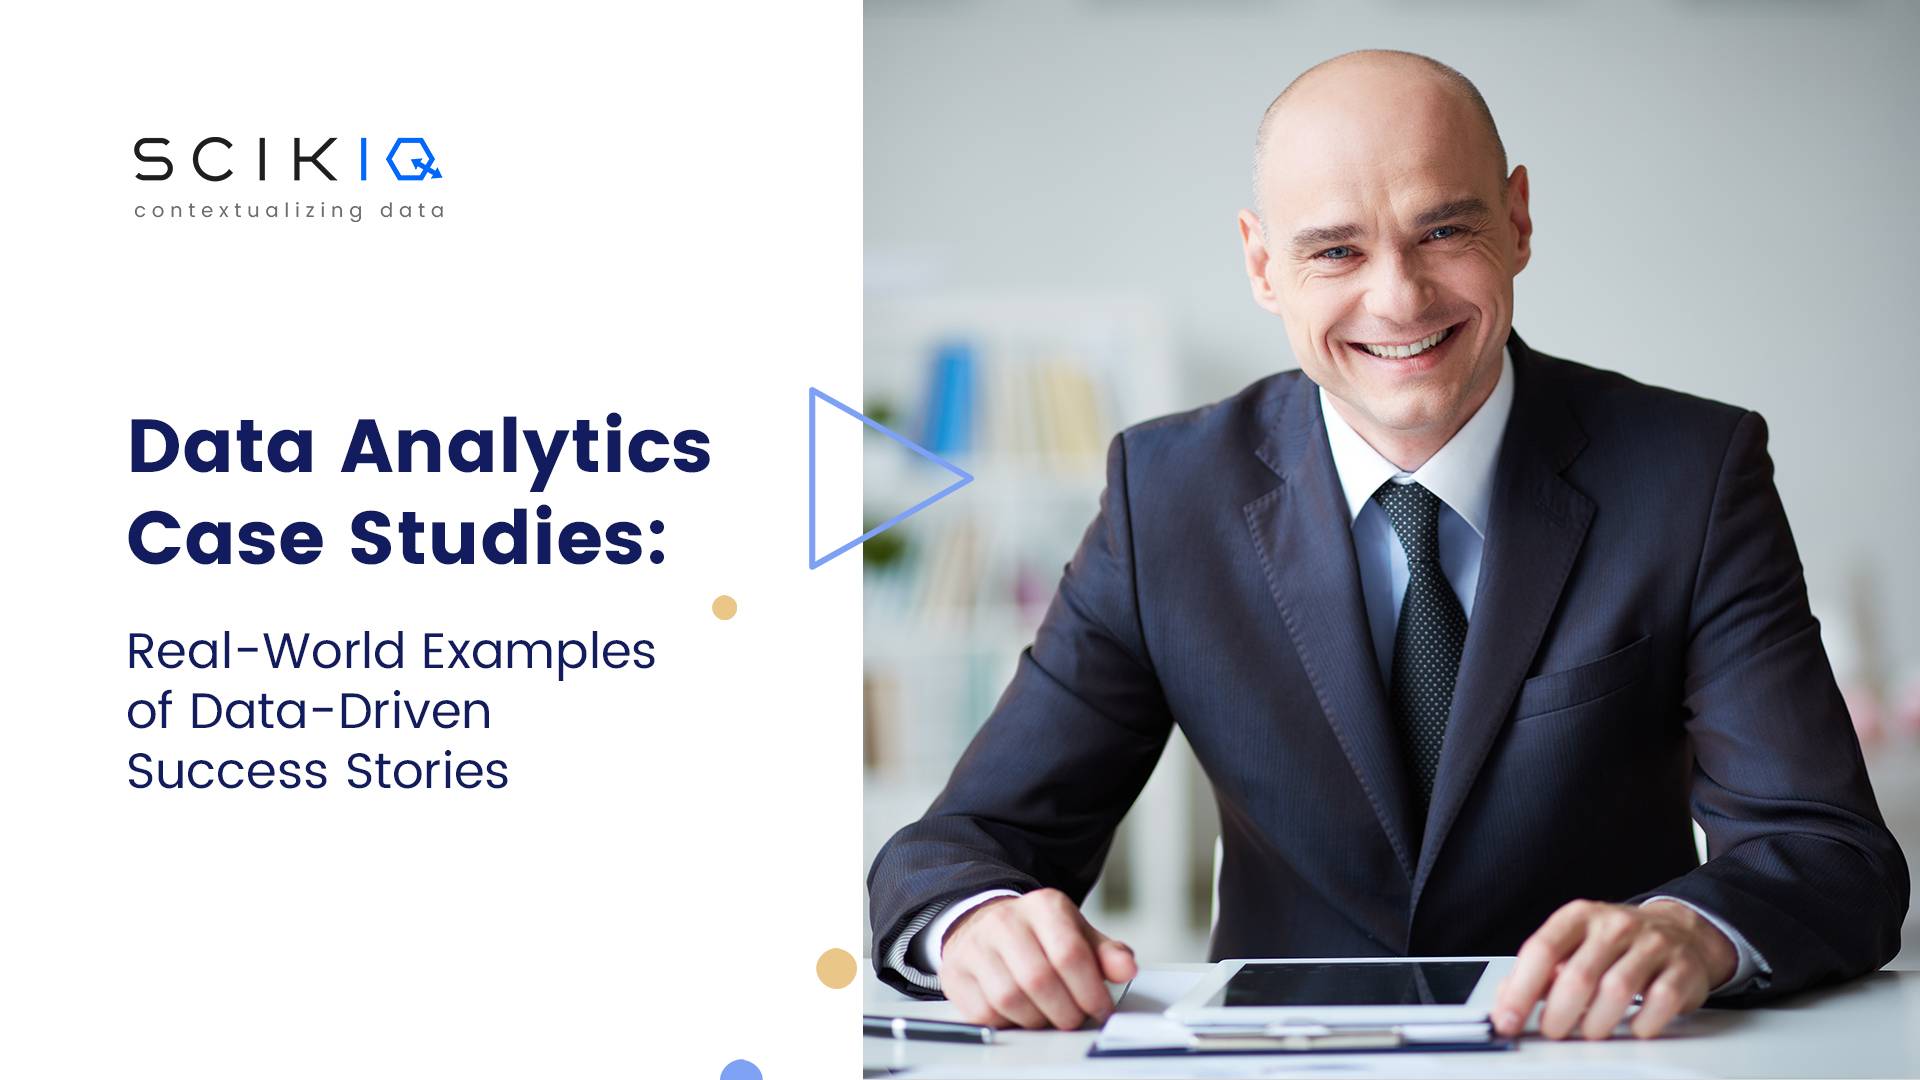 Data Analytics Case Studies that will inspire you.